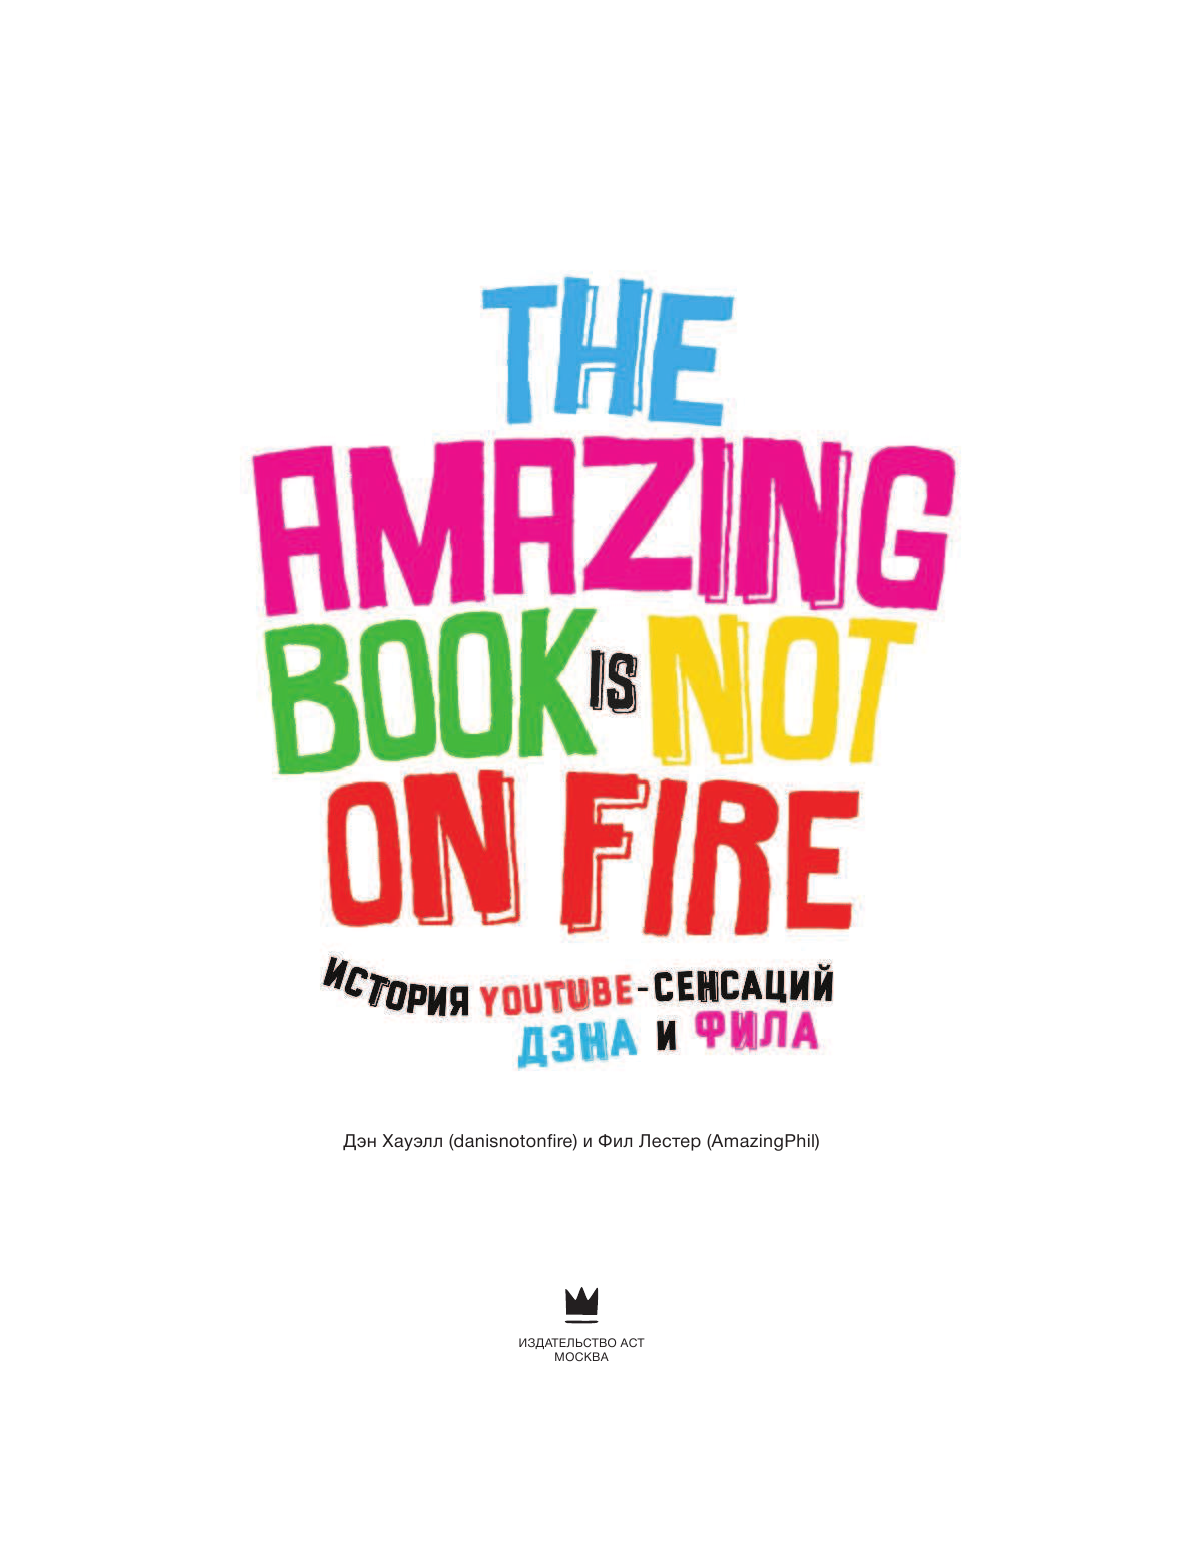 Хауэлл Дэн, Лестер Фил История YouTube-сенсаций Дэна и Фила: The Amazing Book Is Not On Fire - страница 2